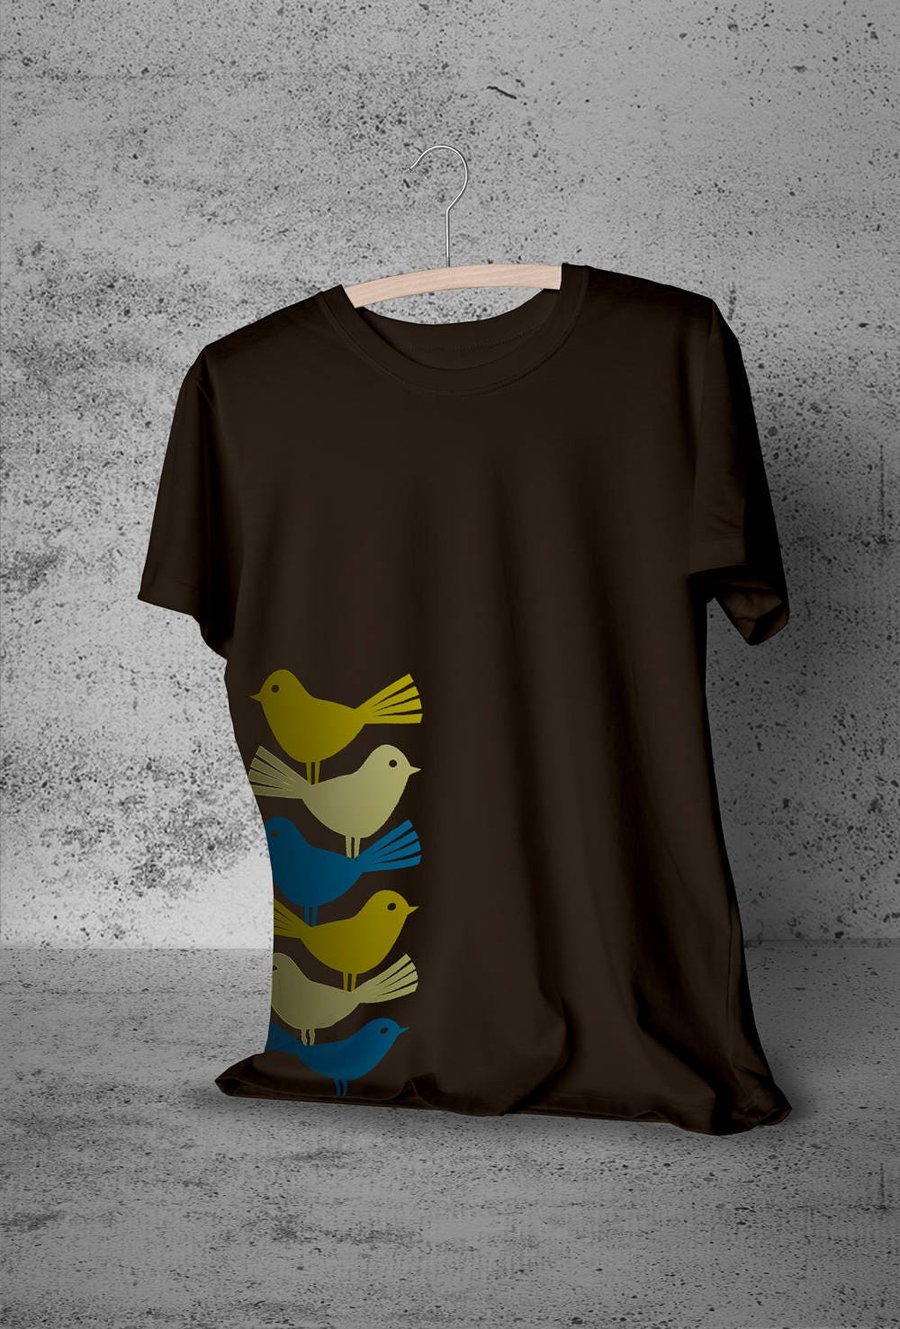 Bird mens T-Shirt. Malefemale clothing, graphic bird tee. Choice of colours! Big